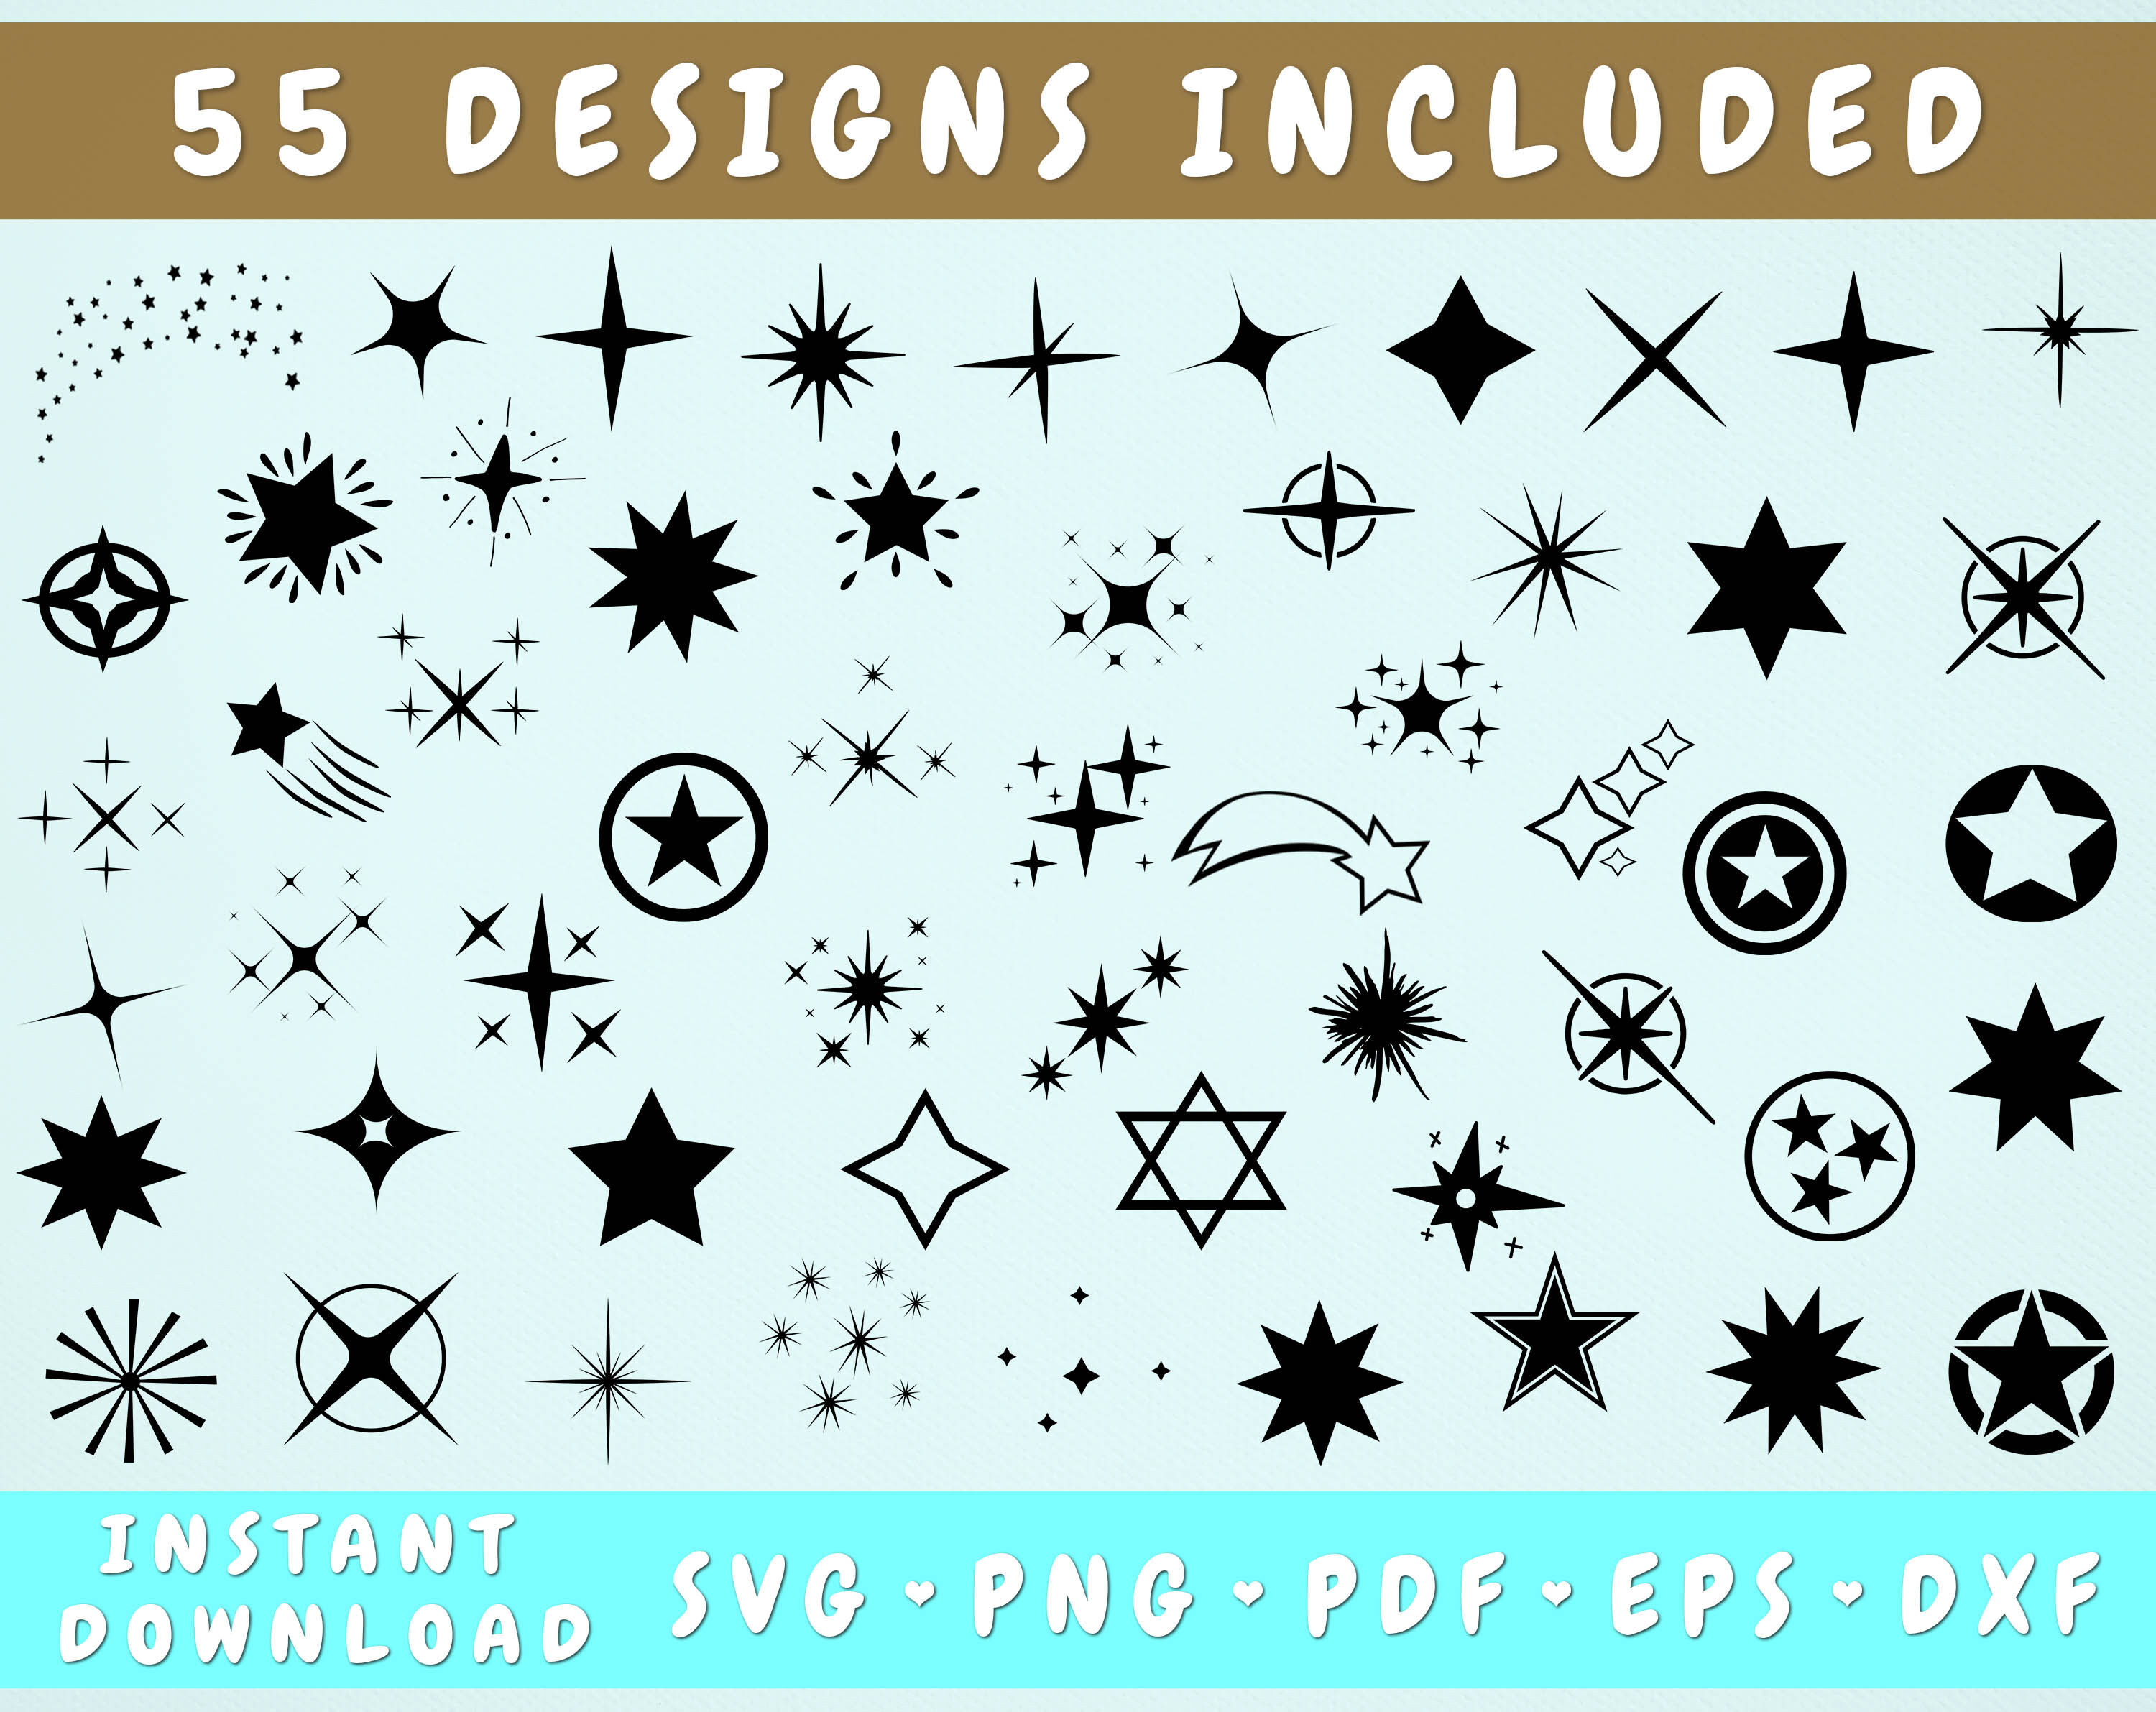 Free Glitter Star Clipart - Download in Illustrator, EPS, SVG, JPG, PNG